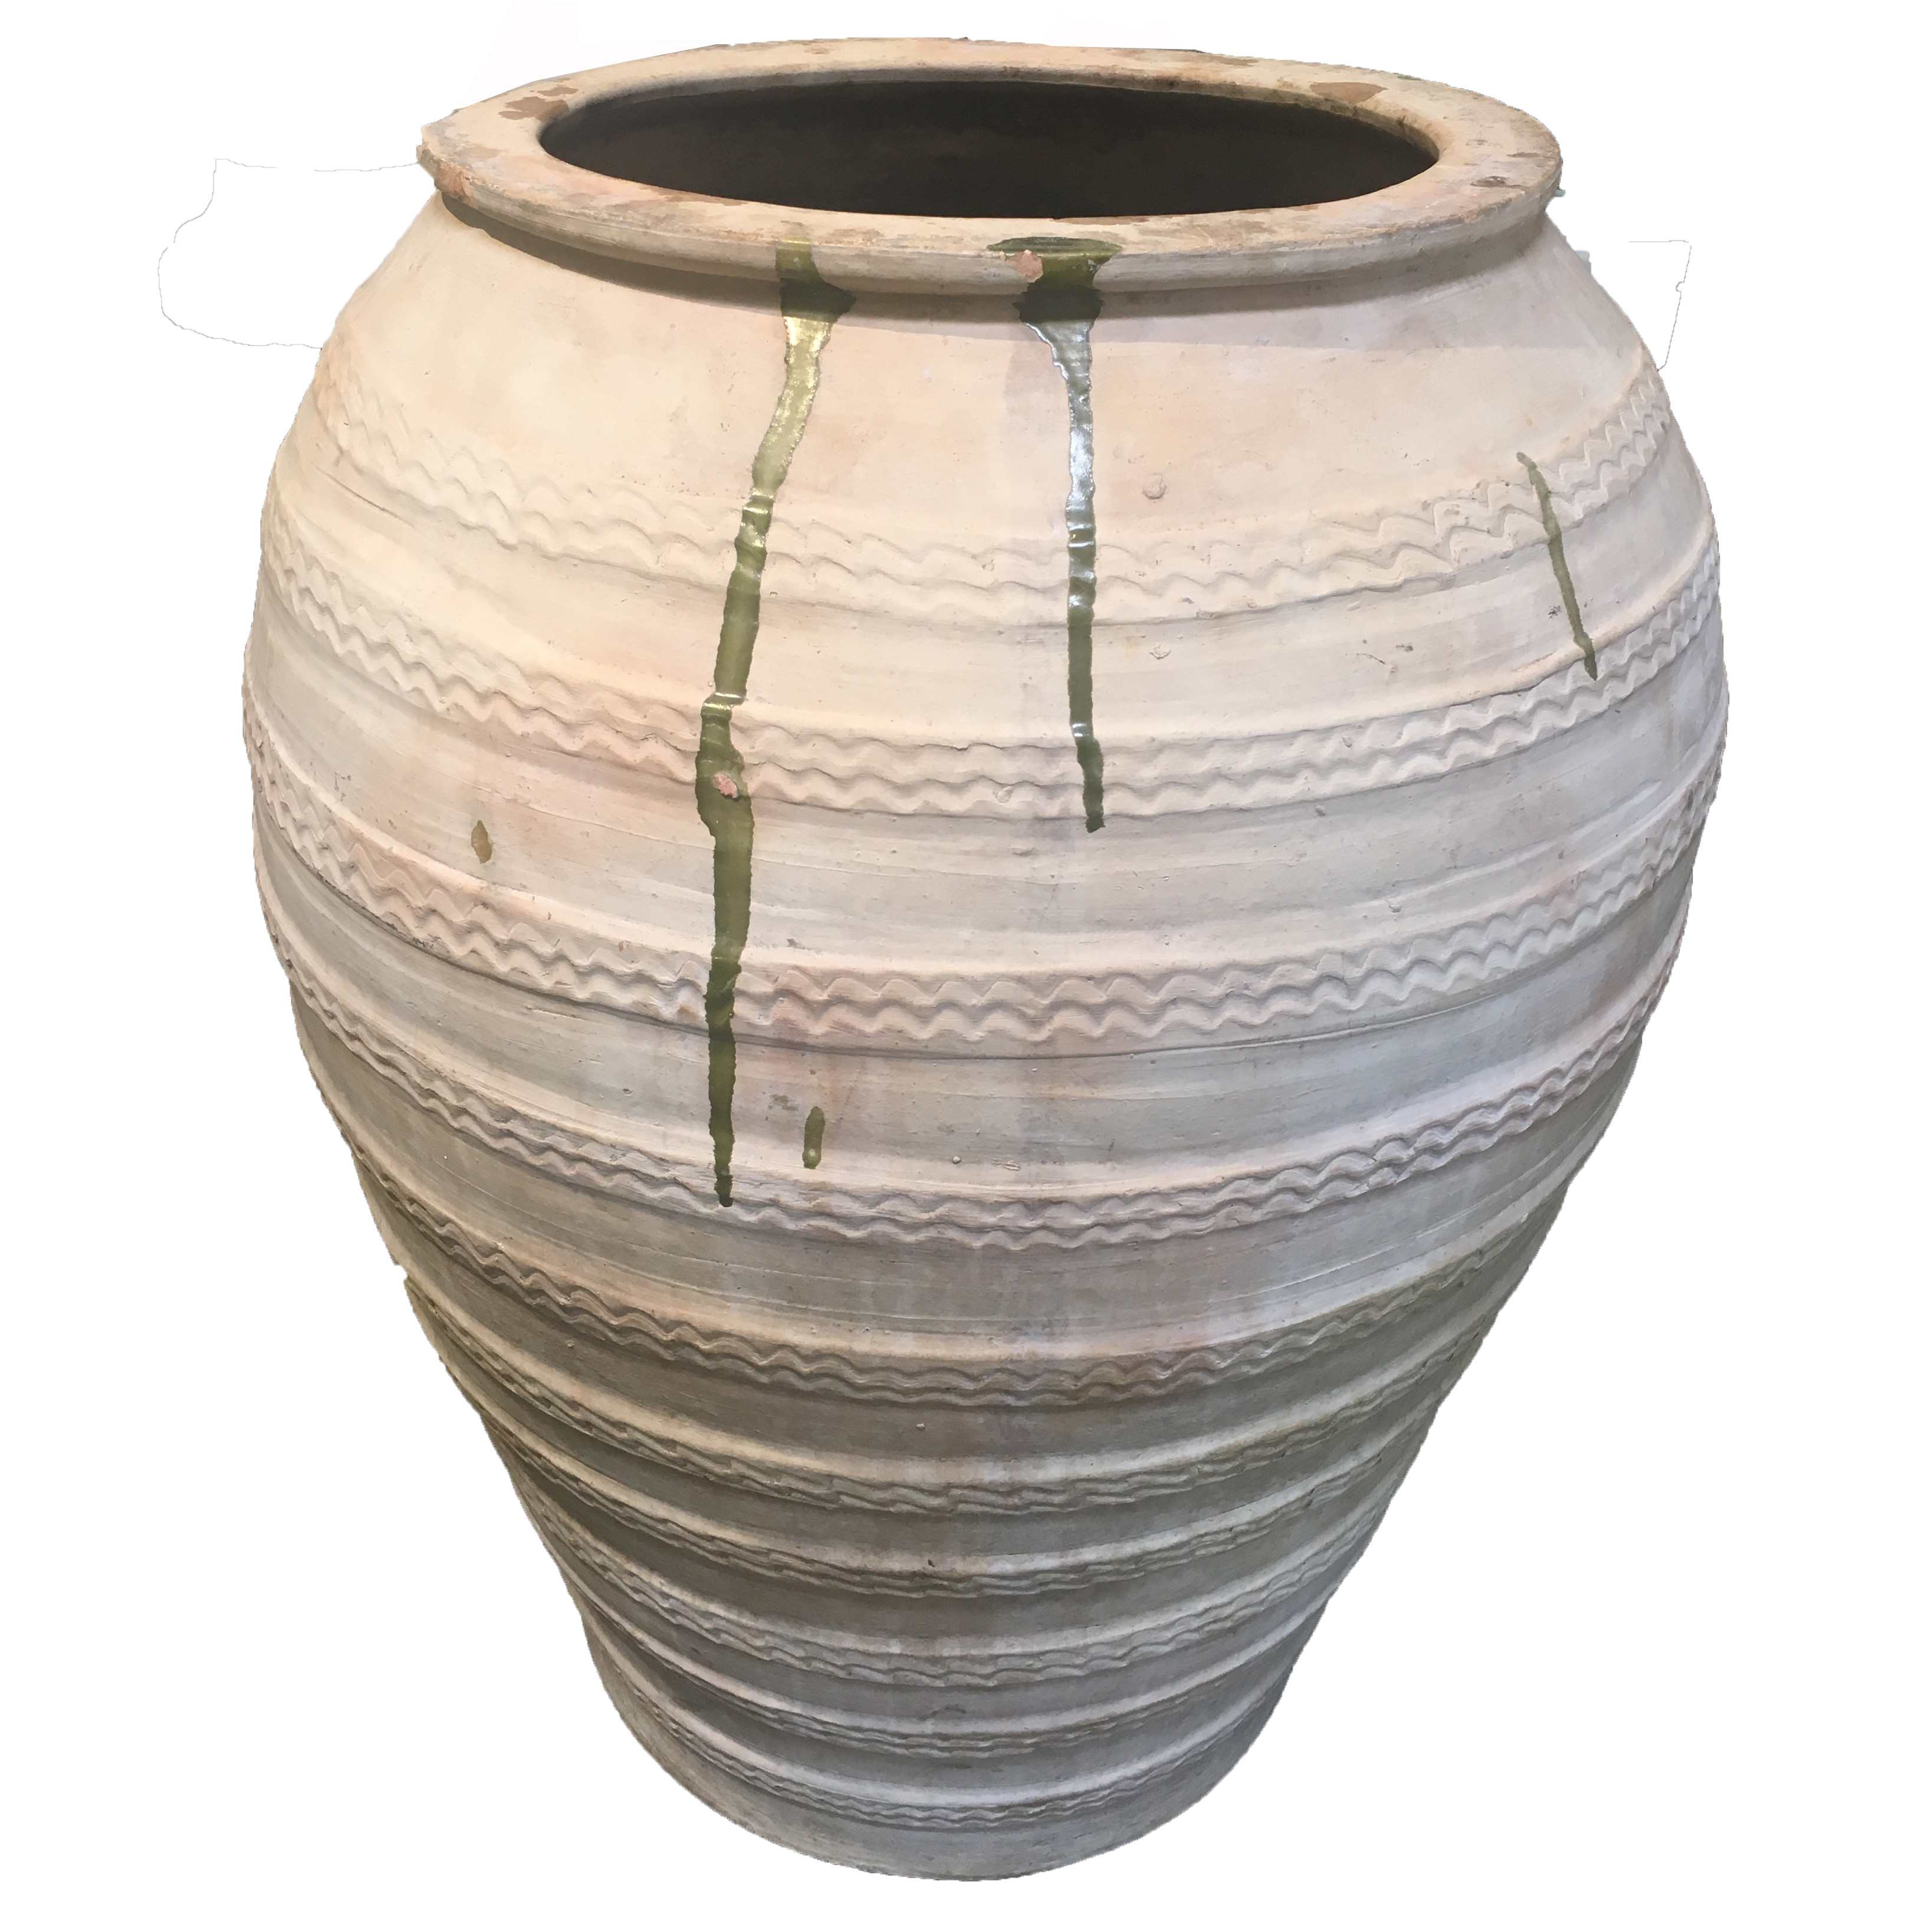 18 Lovable 12 Inch Ceramic Vase 2024 free download 12 inch ceramic vase of antique extra large spanish ceramic oil jar inner gardens throughout antique extra large spanish ceramic oil jar